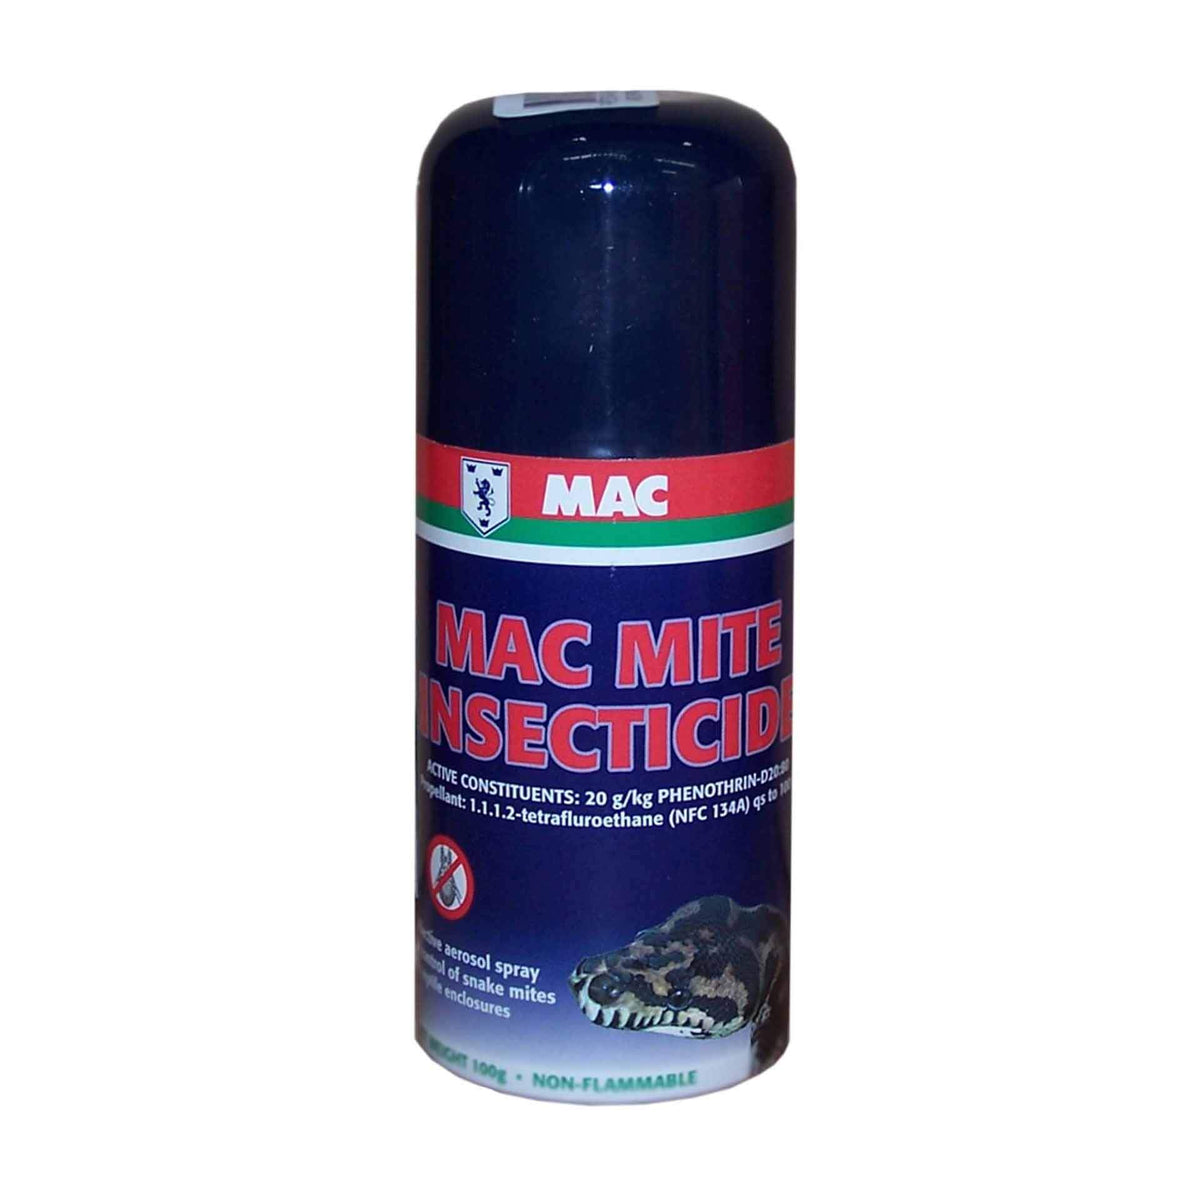 Mac Mite Insecticide Spray 100g